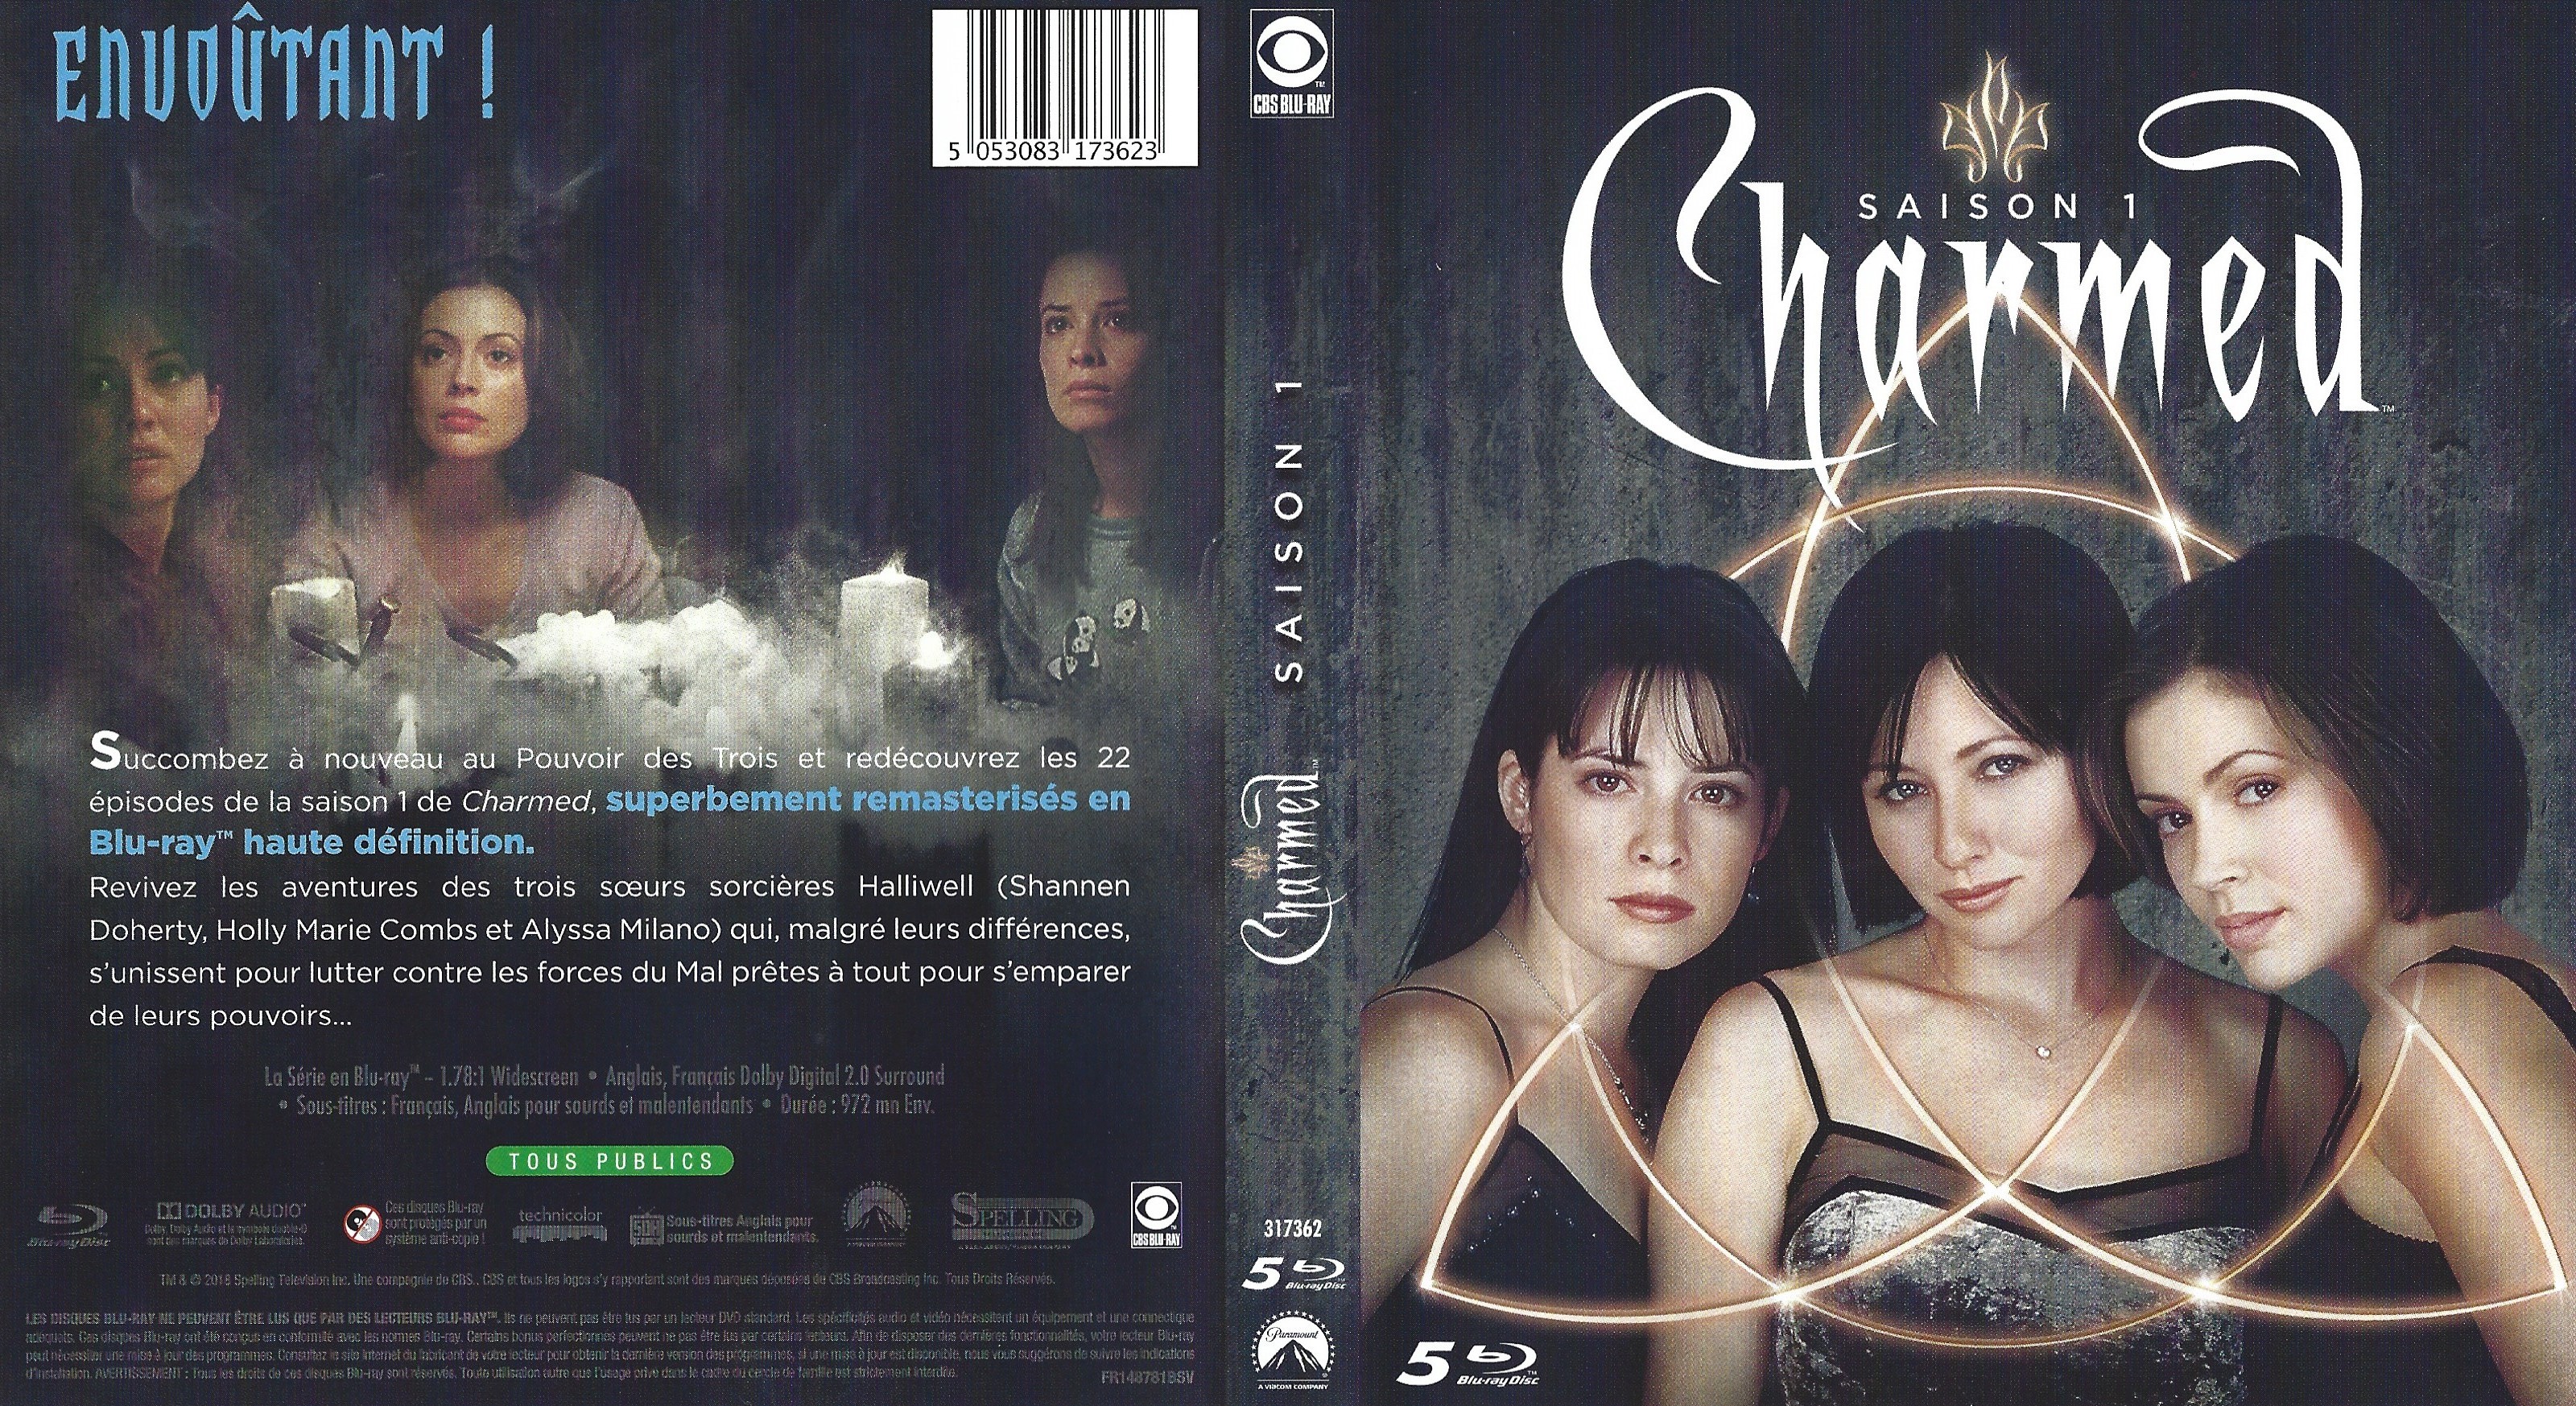 Jaquette DVD Charmed Saison 1 (BLU-RAY)